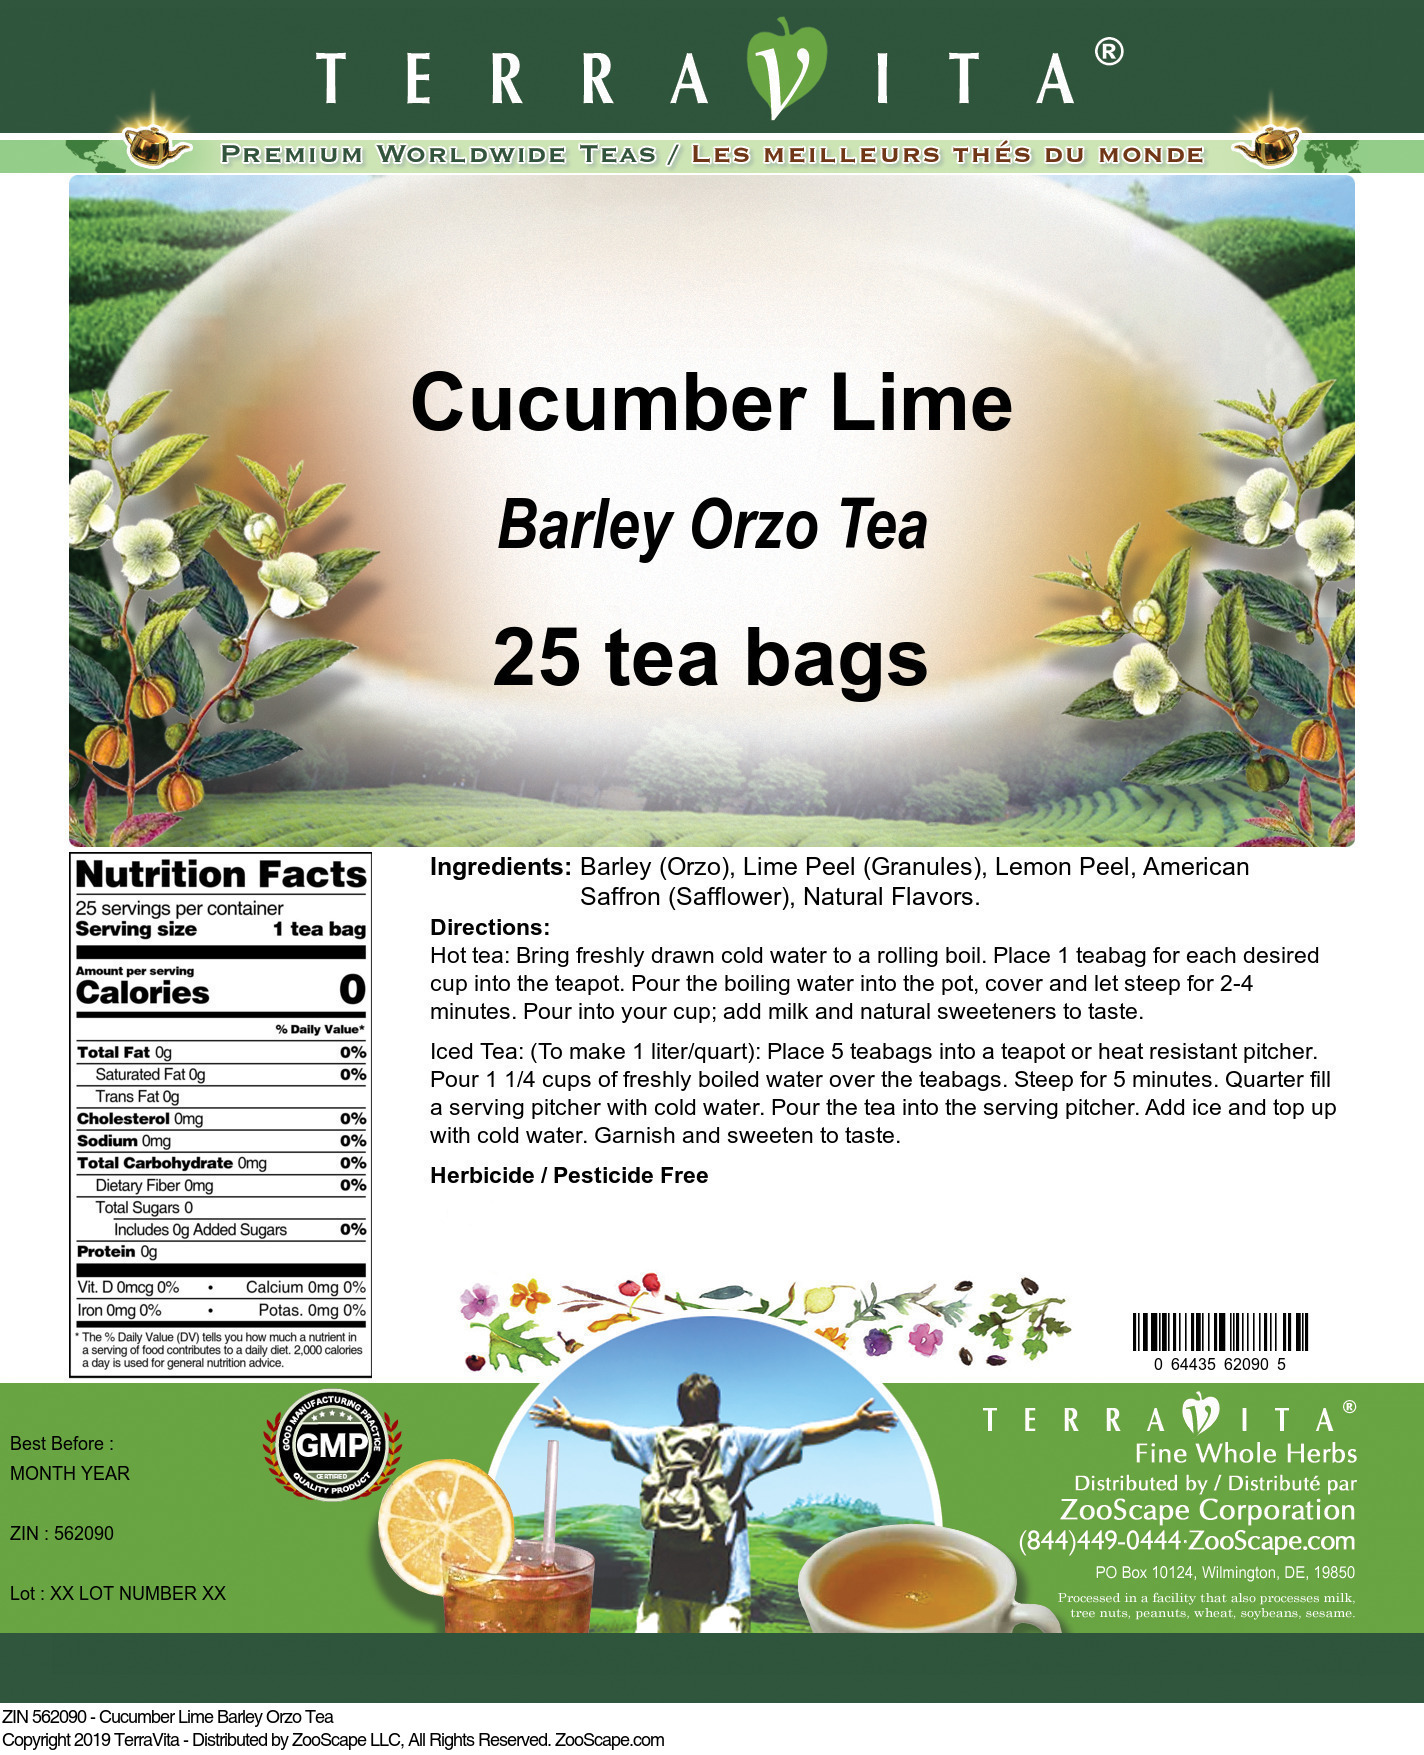 Cucumber Lime Barley Orzo Tea - Label